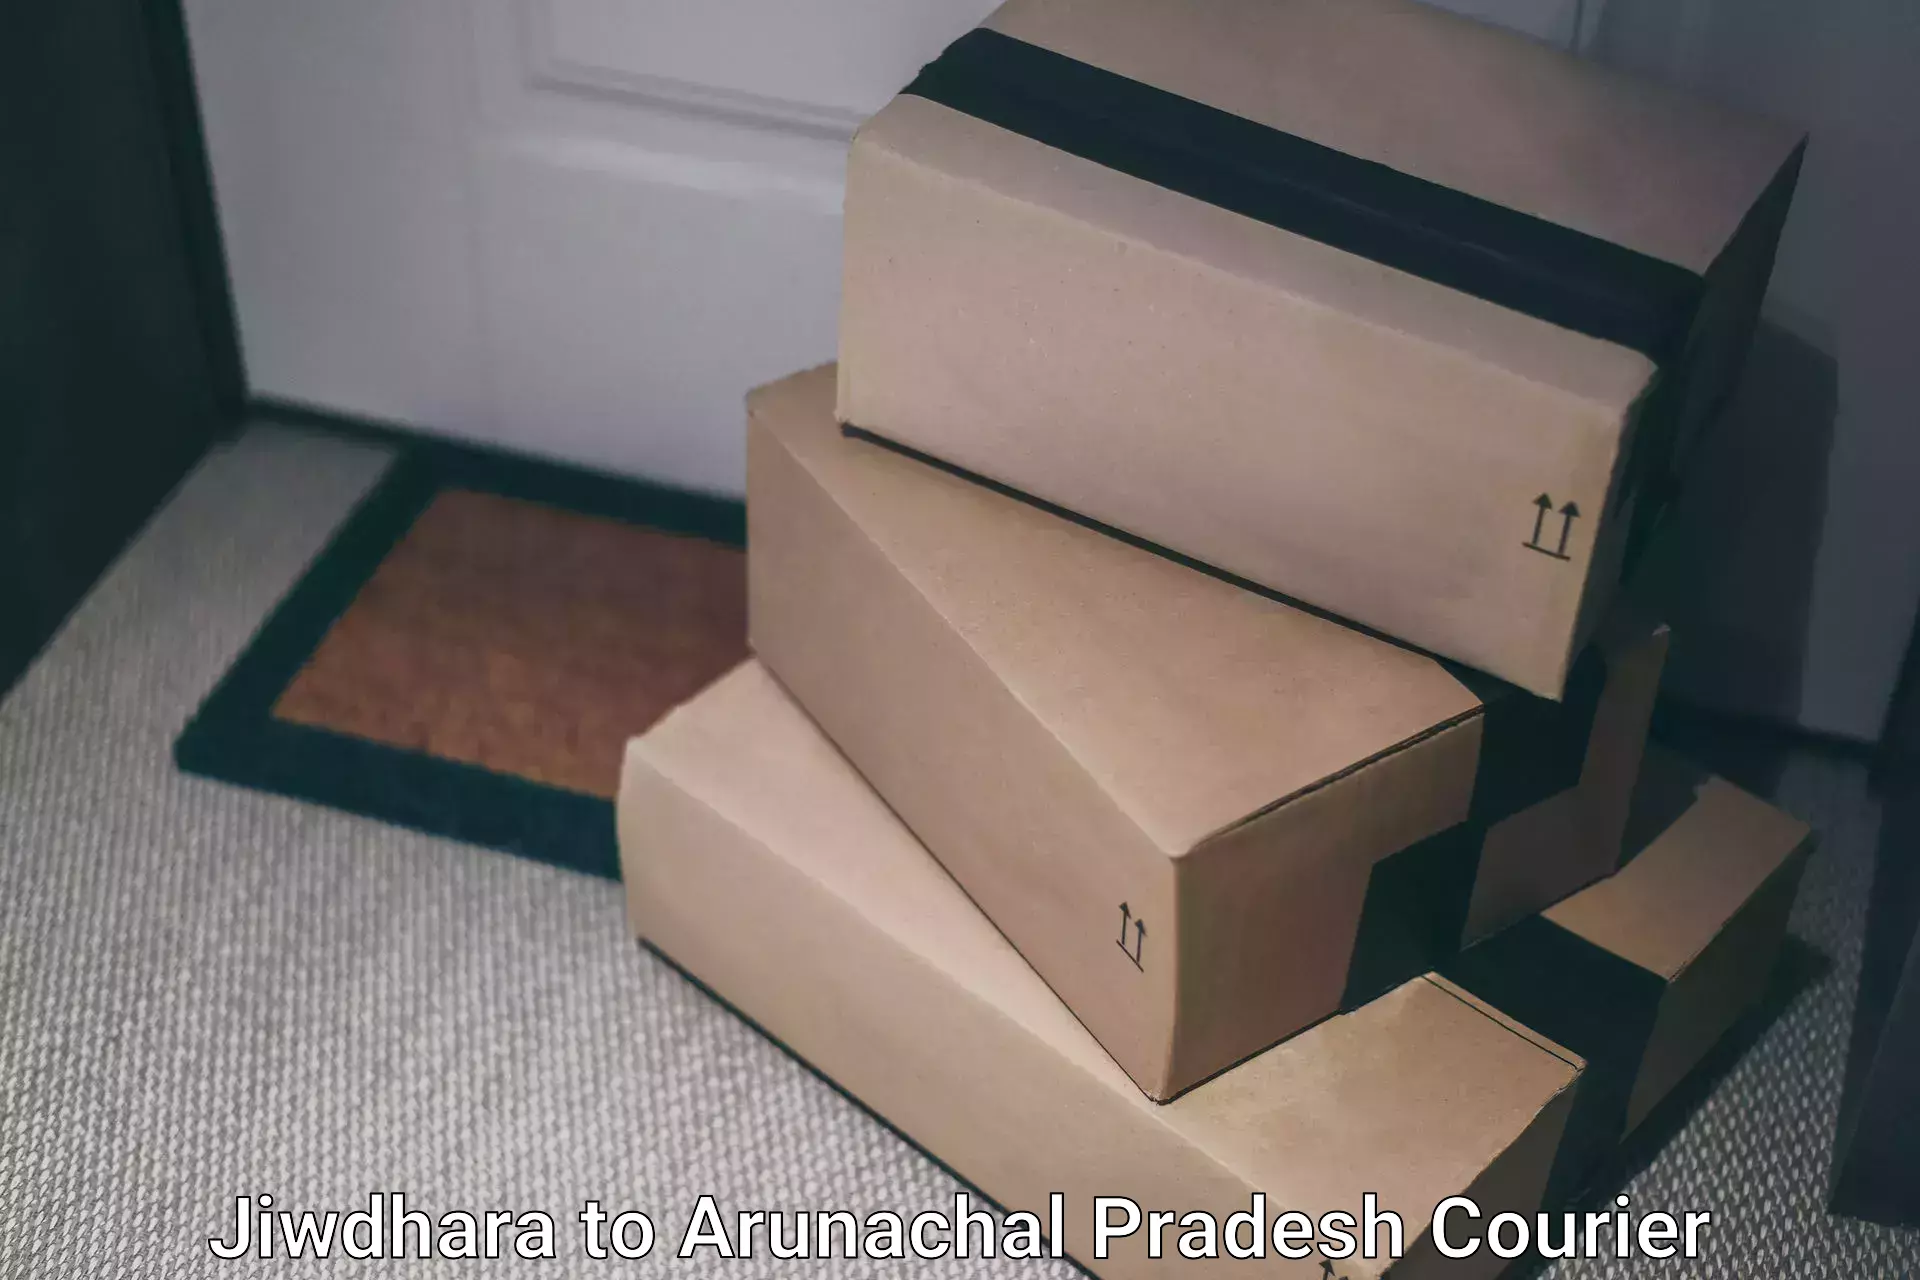 Professional parcel services Jiwdhara to Lohit